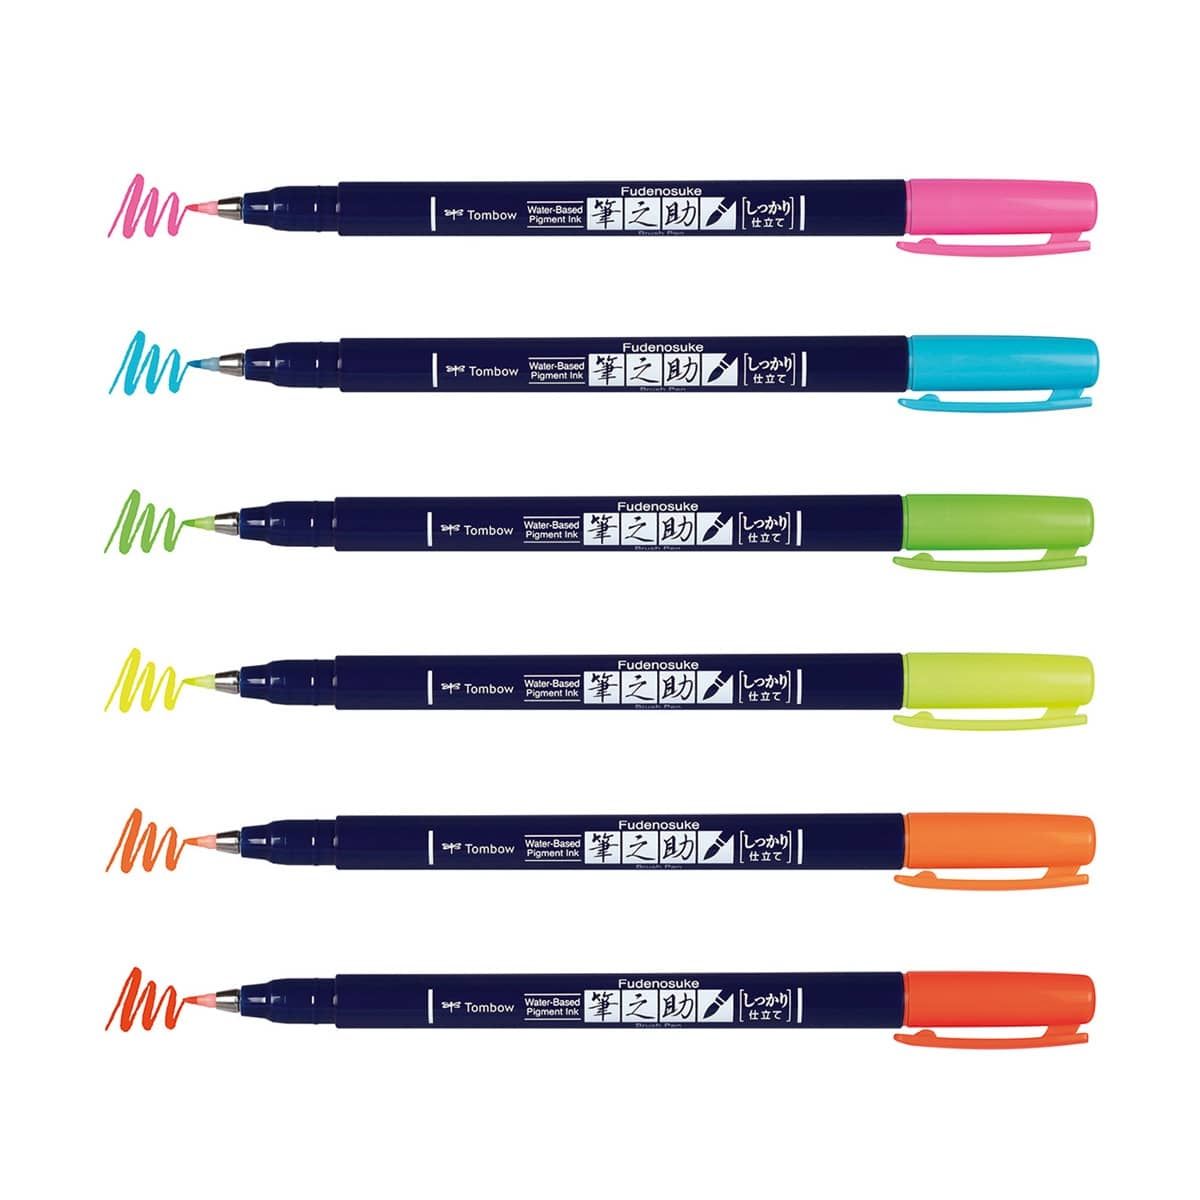 Brush Pen Set of 6 - Neon Colors